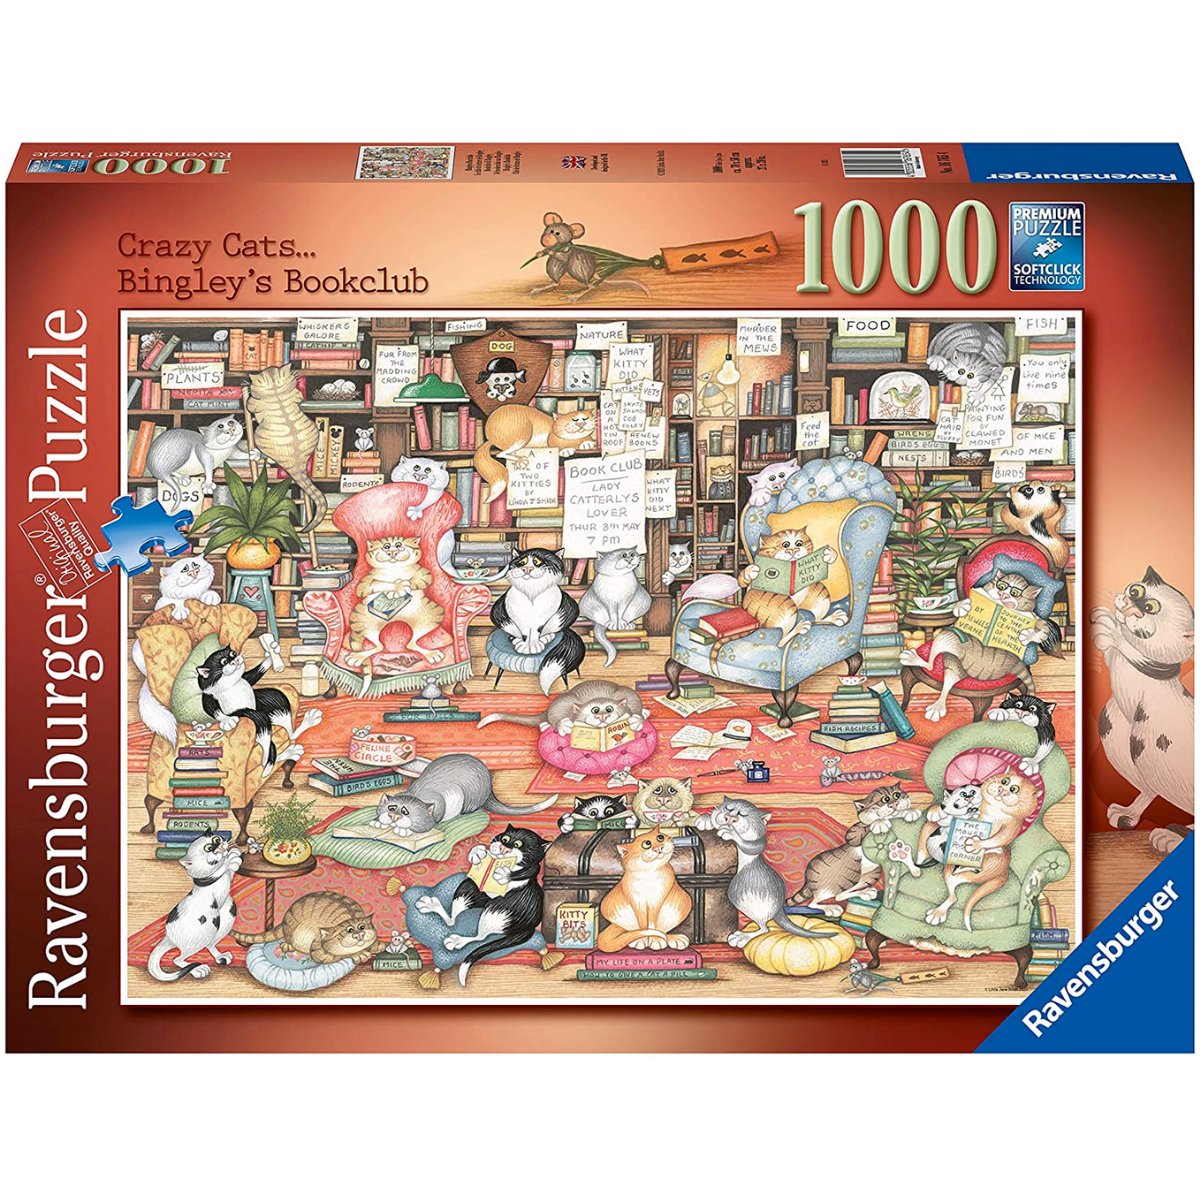 Ravensburger Crazy Cats Bingley’s Bookclub 1000 Piece Jigsaw Puzzle - Phillips Hobbies